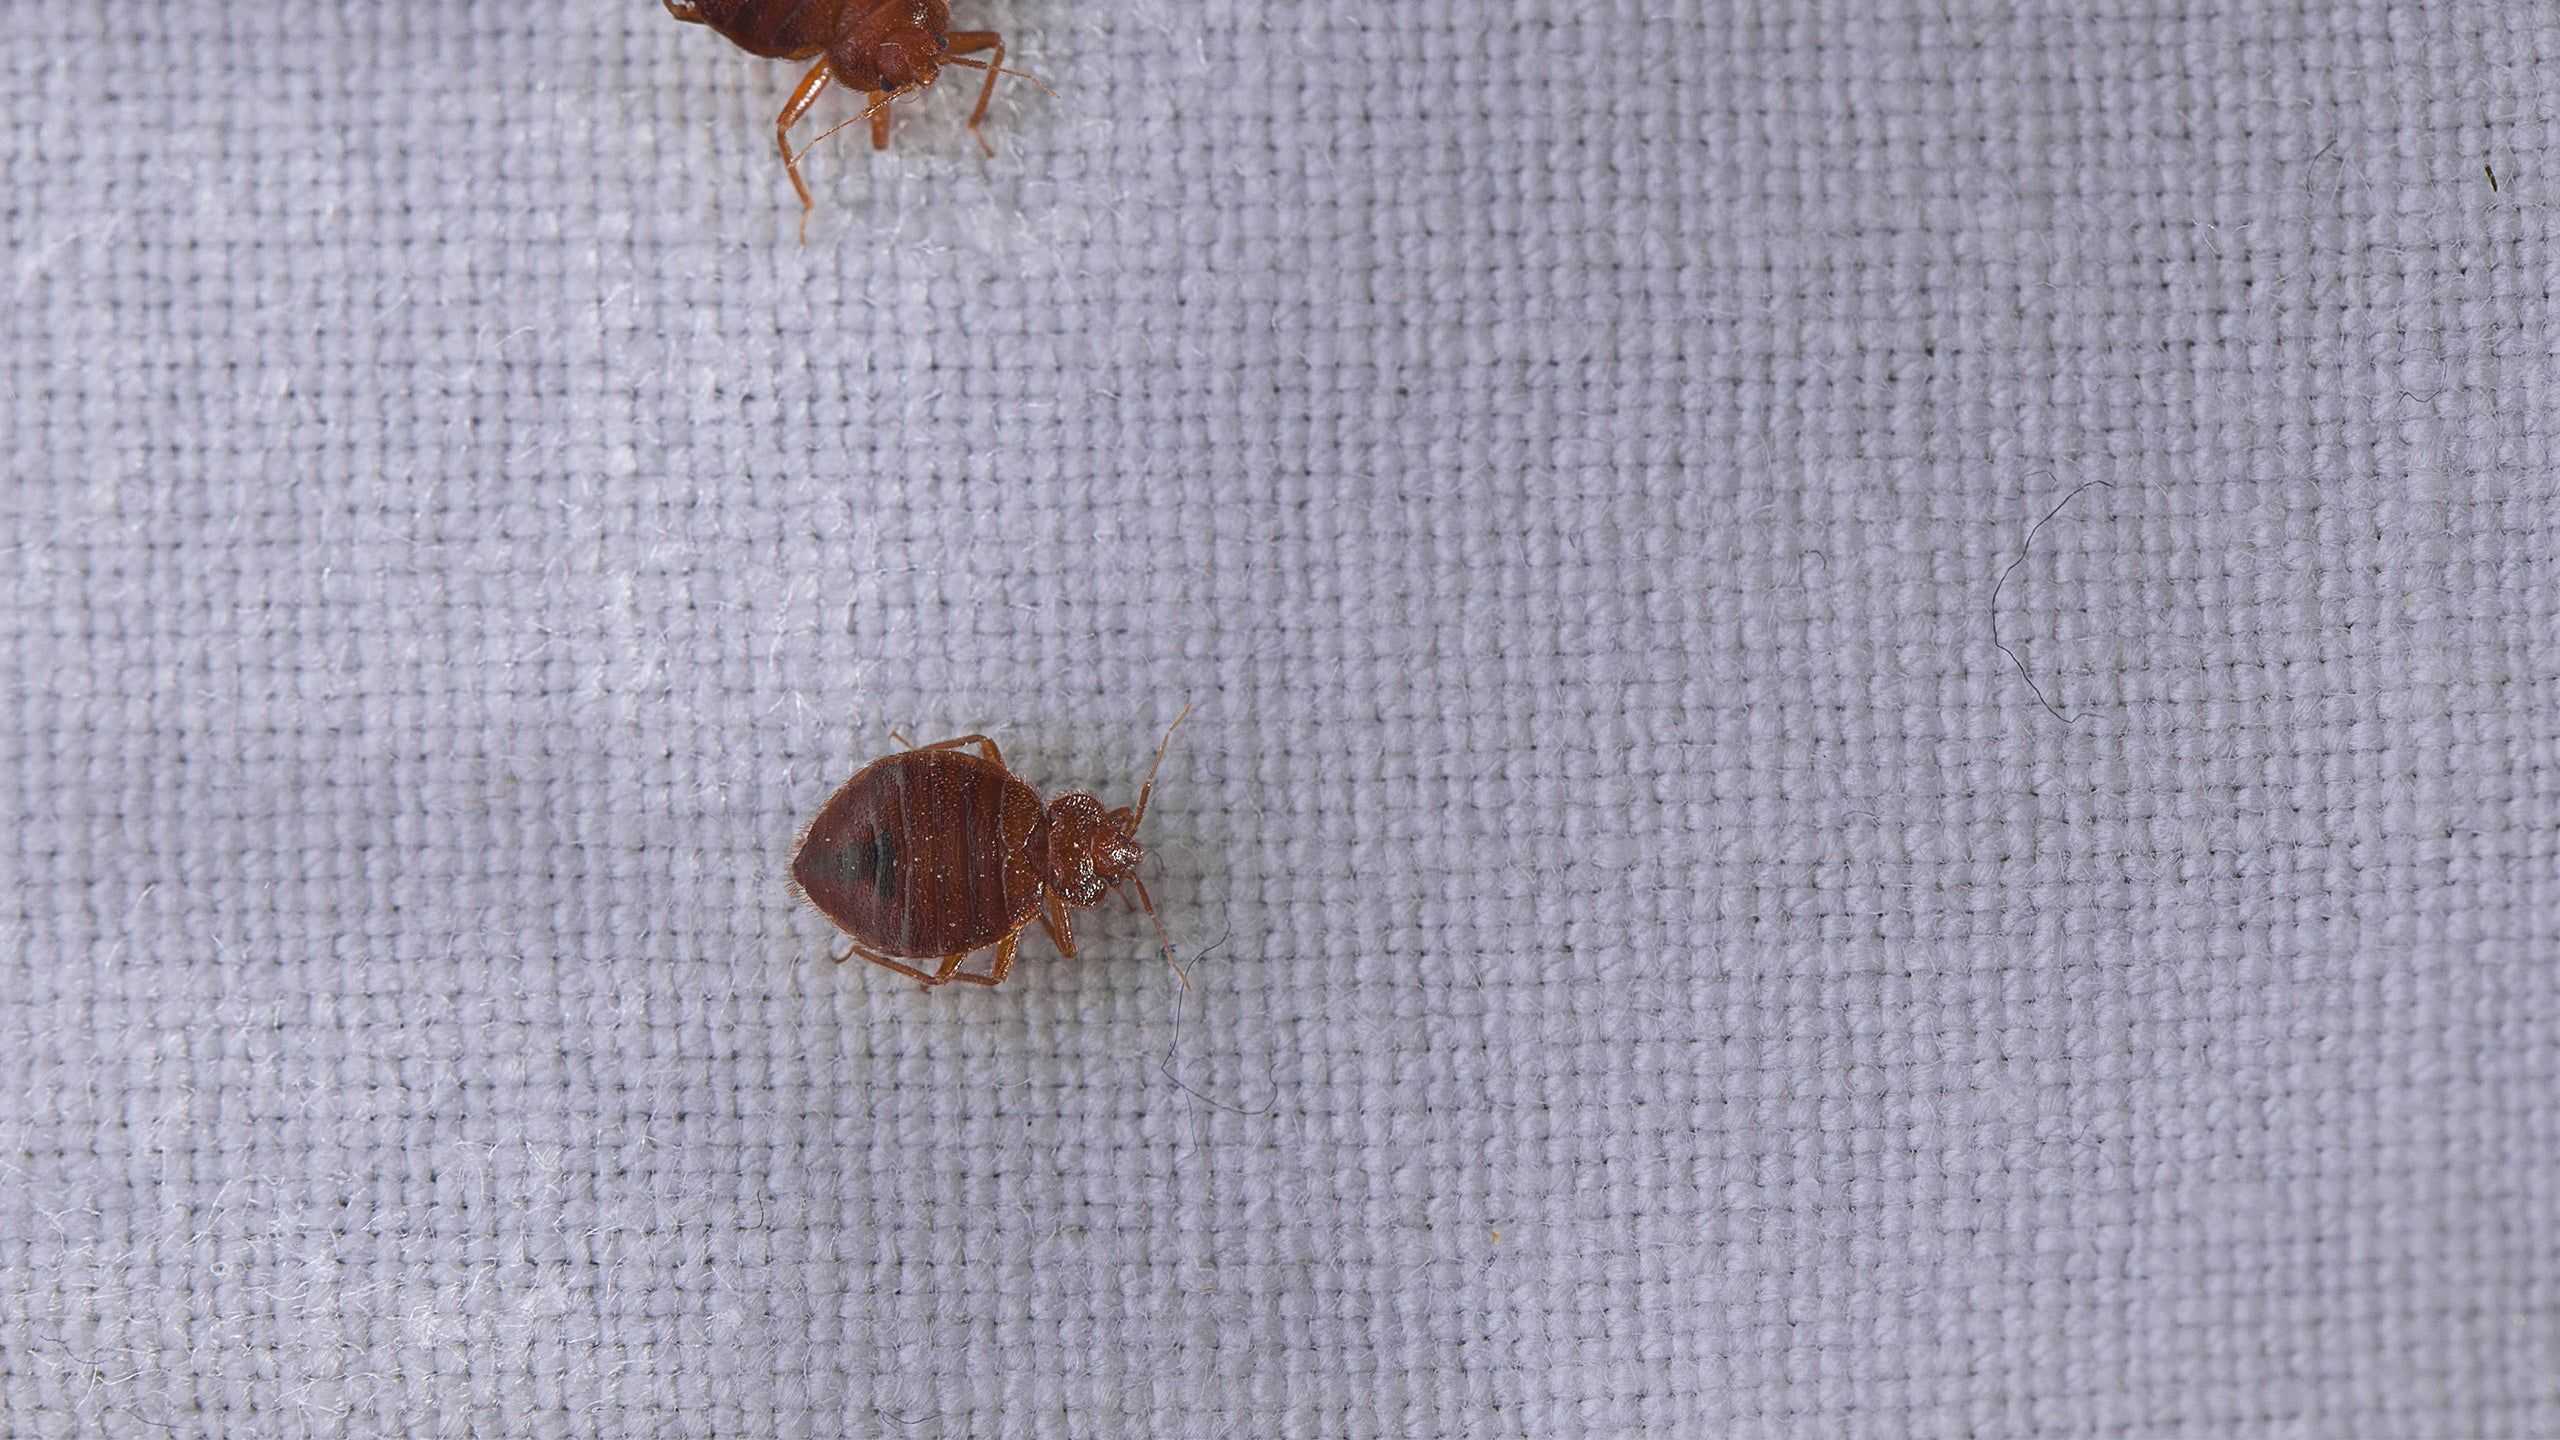 Bed bug extermination West Palm Beach